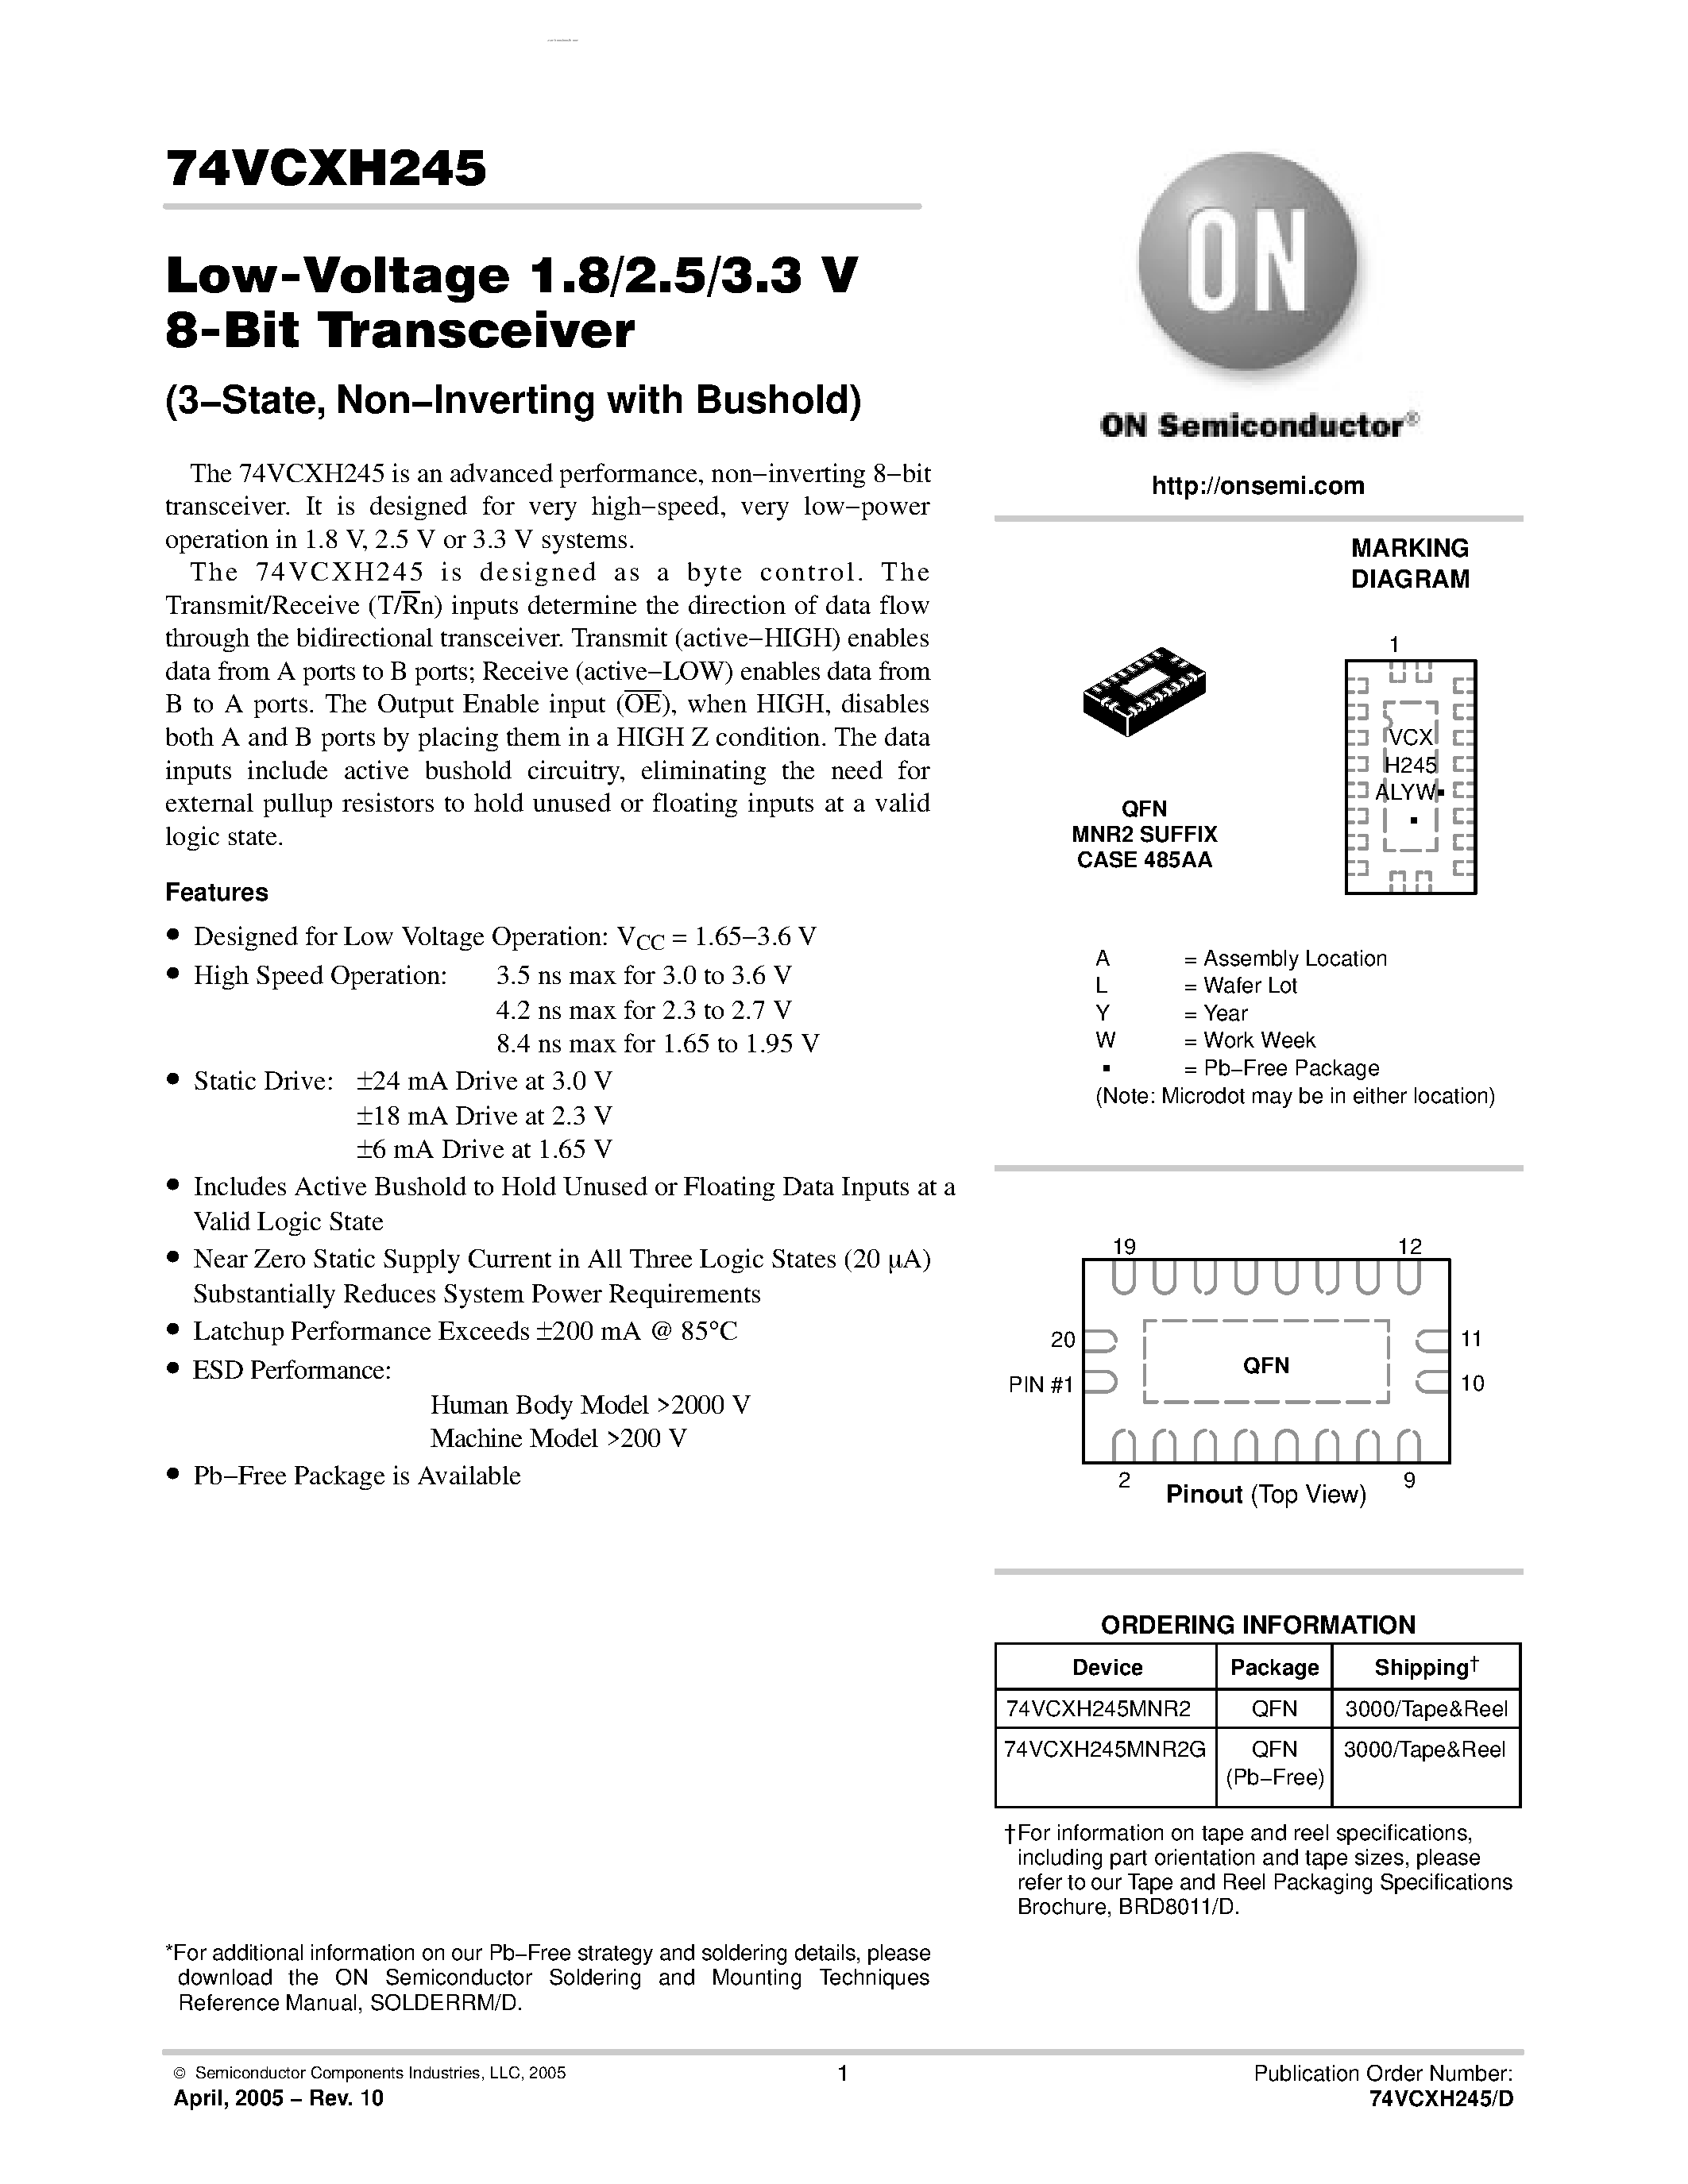 Datasheet 74VCXH245 - Low-Voltage 1.8/2.5/3.3 V 8-Bit Transceiver page 1